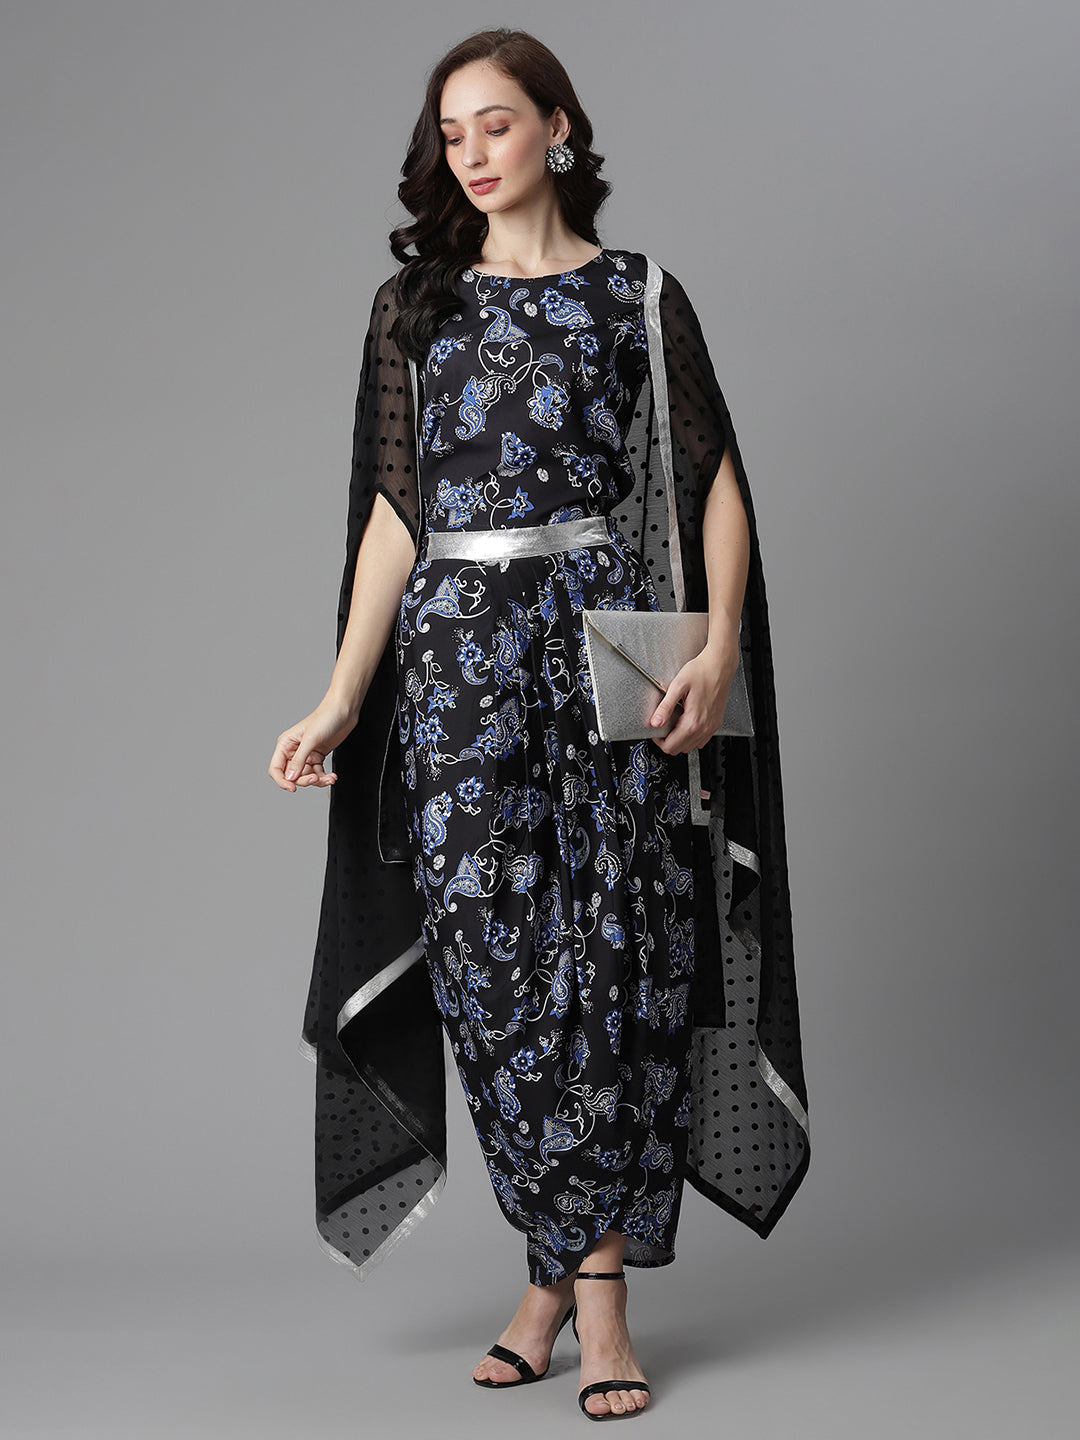 Women's Black Crepe Printed Top, Skirt & Shrug By Ahalyaa - 3Pc Set